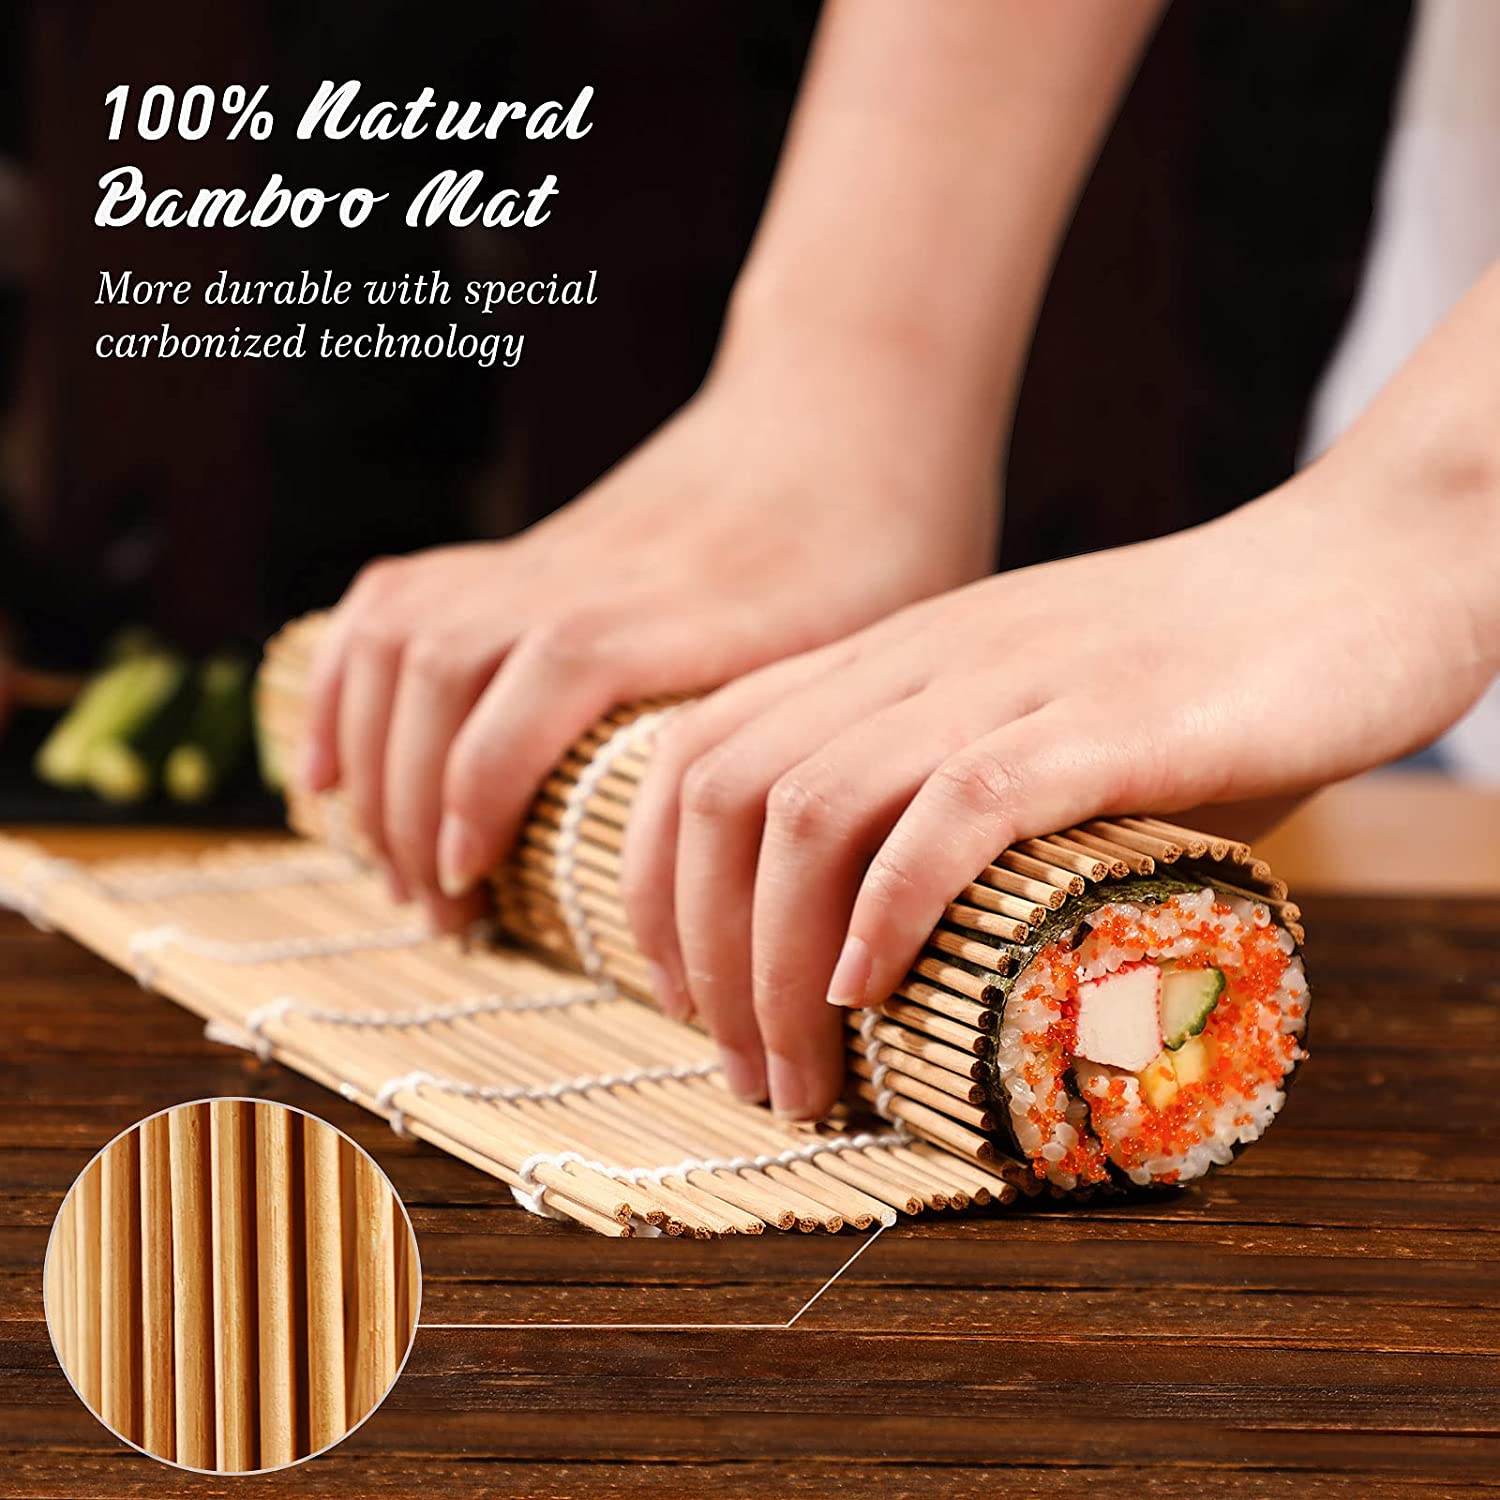 Sushi Making Kit For Beginner, Sushi Making Kit, All In One Sushi Bazooka  Maker With Bamboo Mats, Bamboo Chopsticks, Avocado Slicer, Paddle,  Spreader, Sushi Knife, Chopsticks Holder, Storage Bag, Diy Sushi Roller